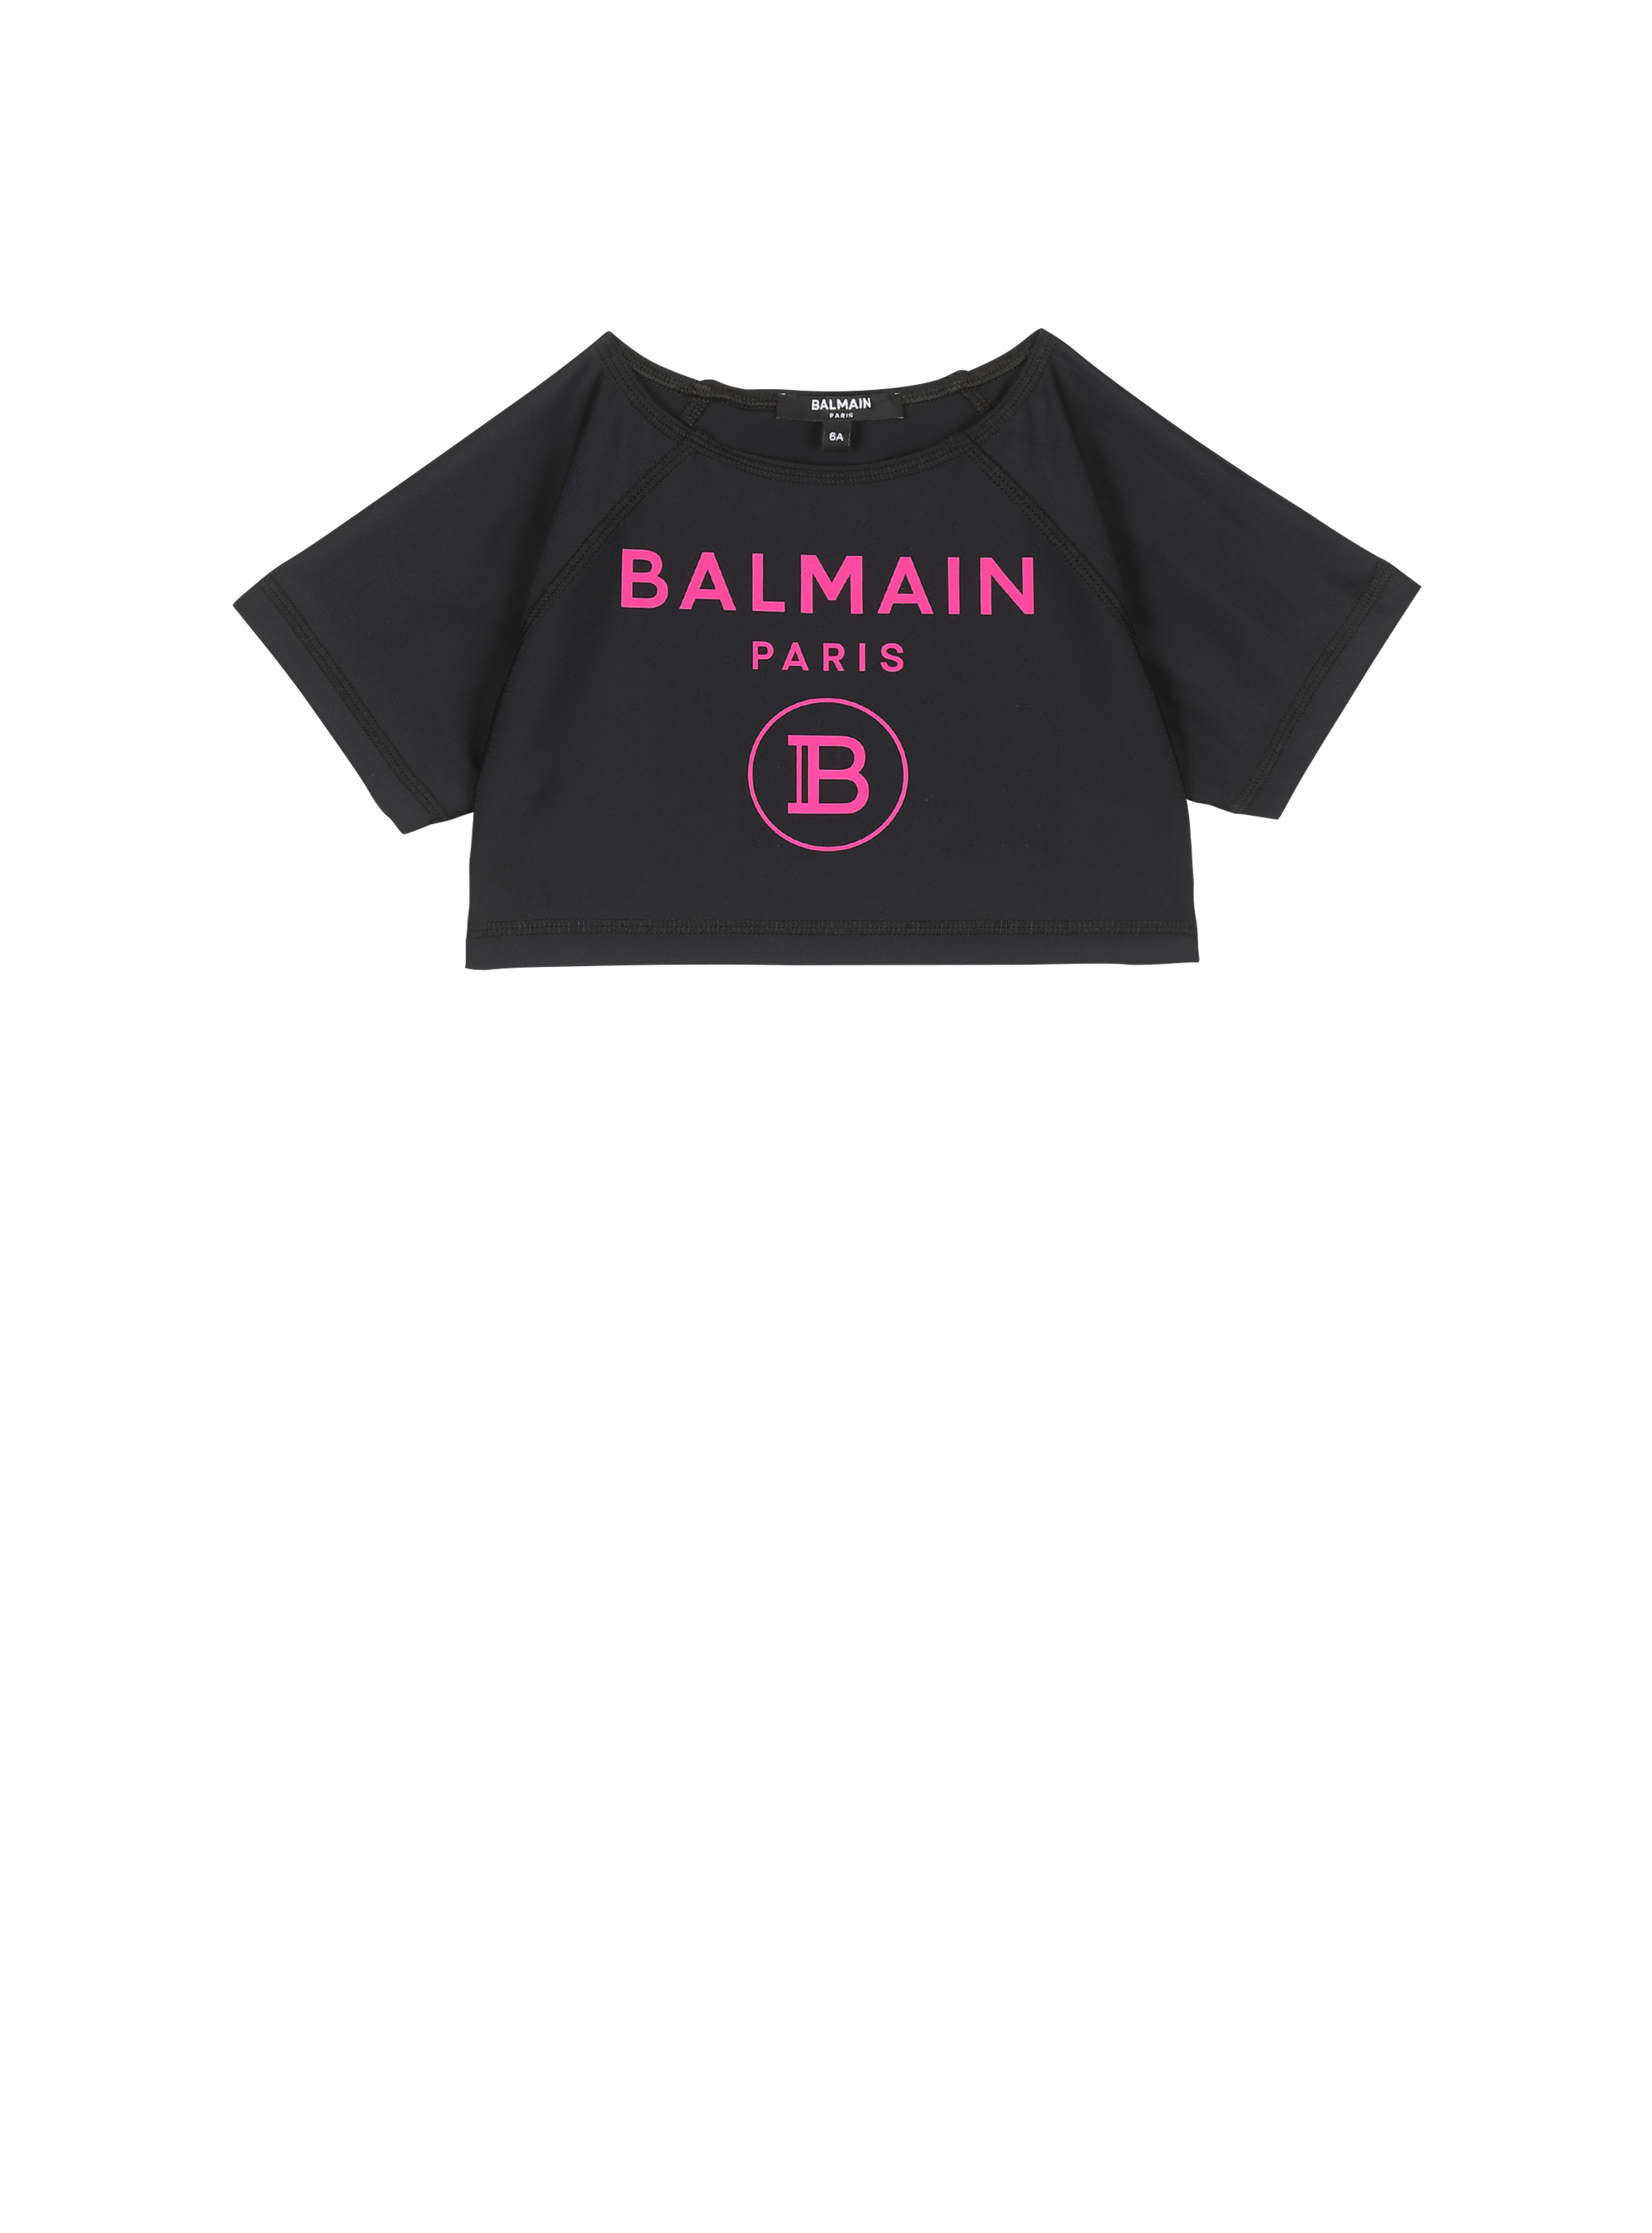 Balmain巴尔曼标志泳装T恤, black